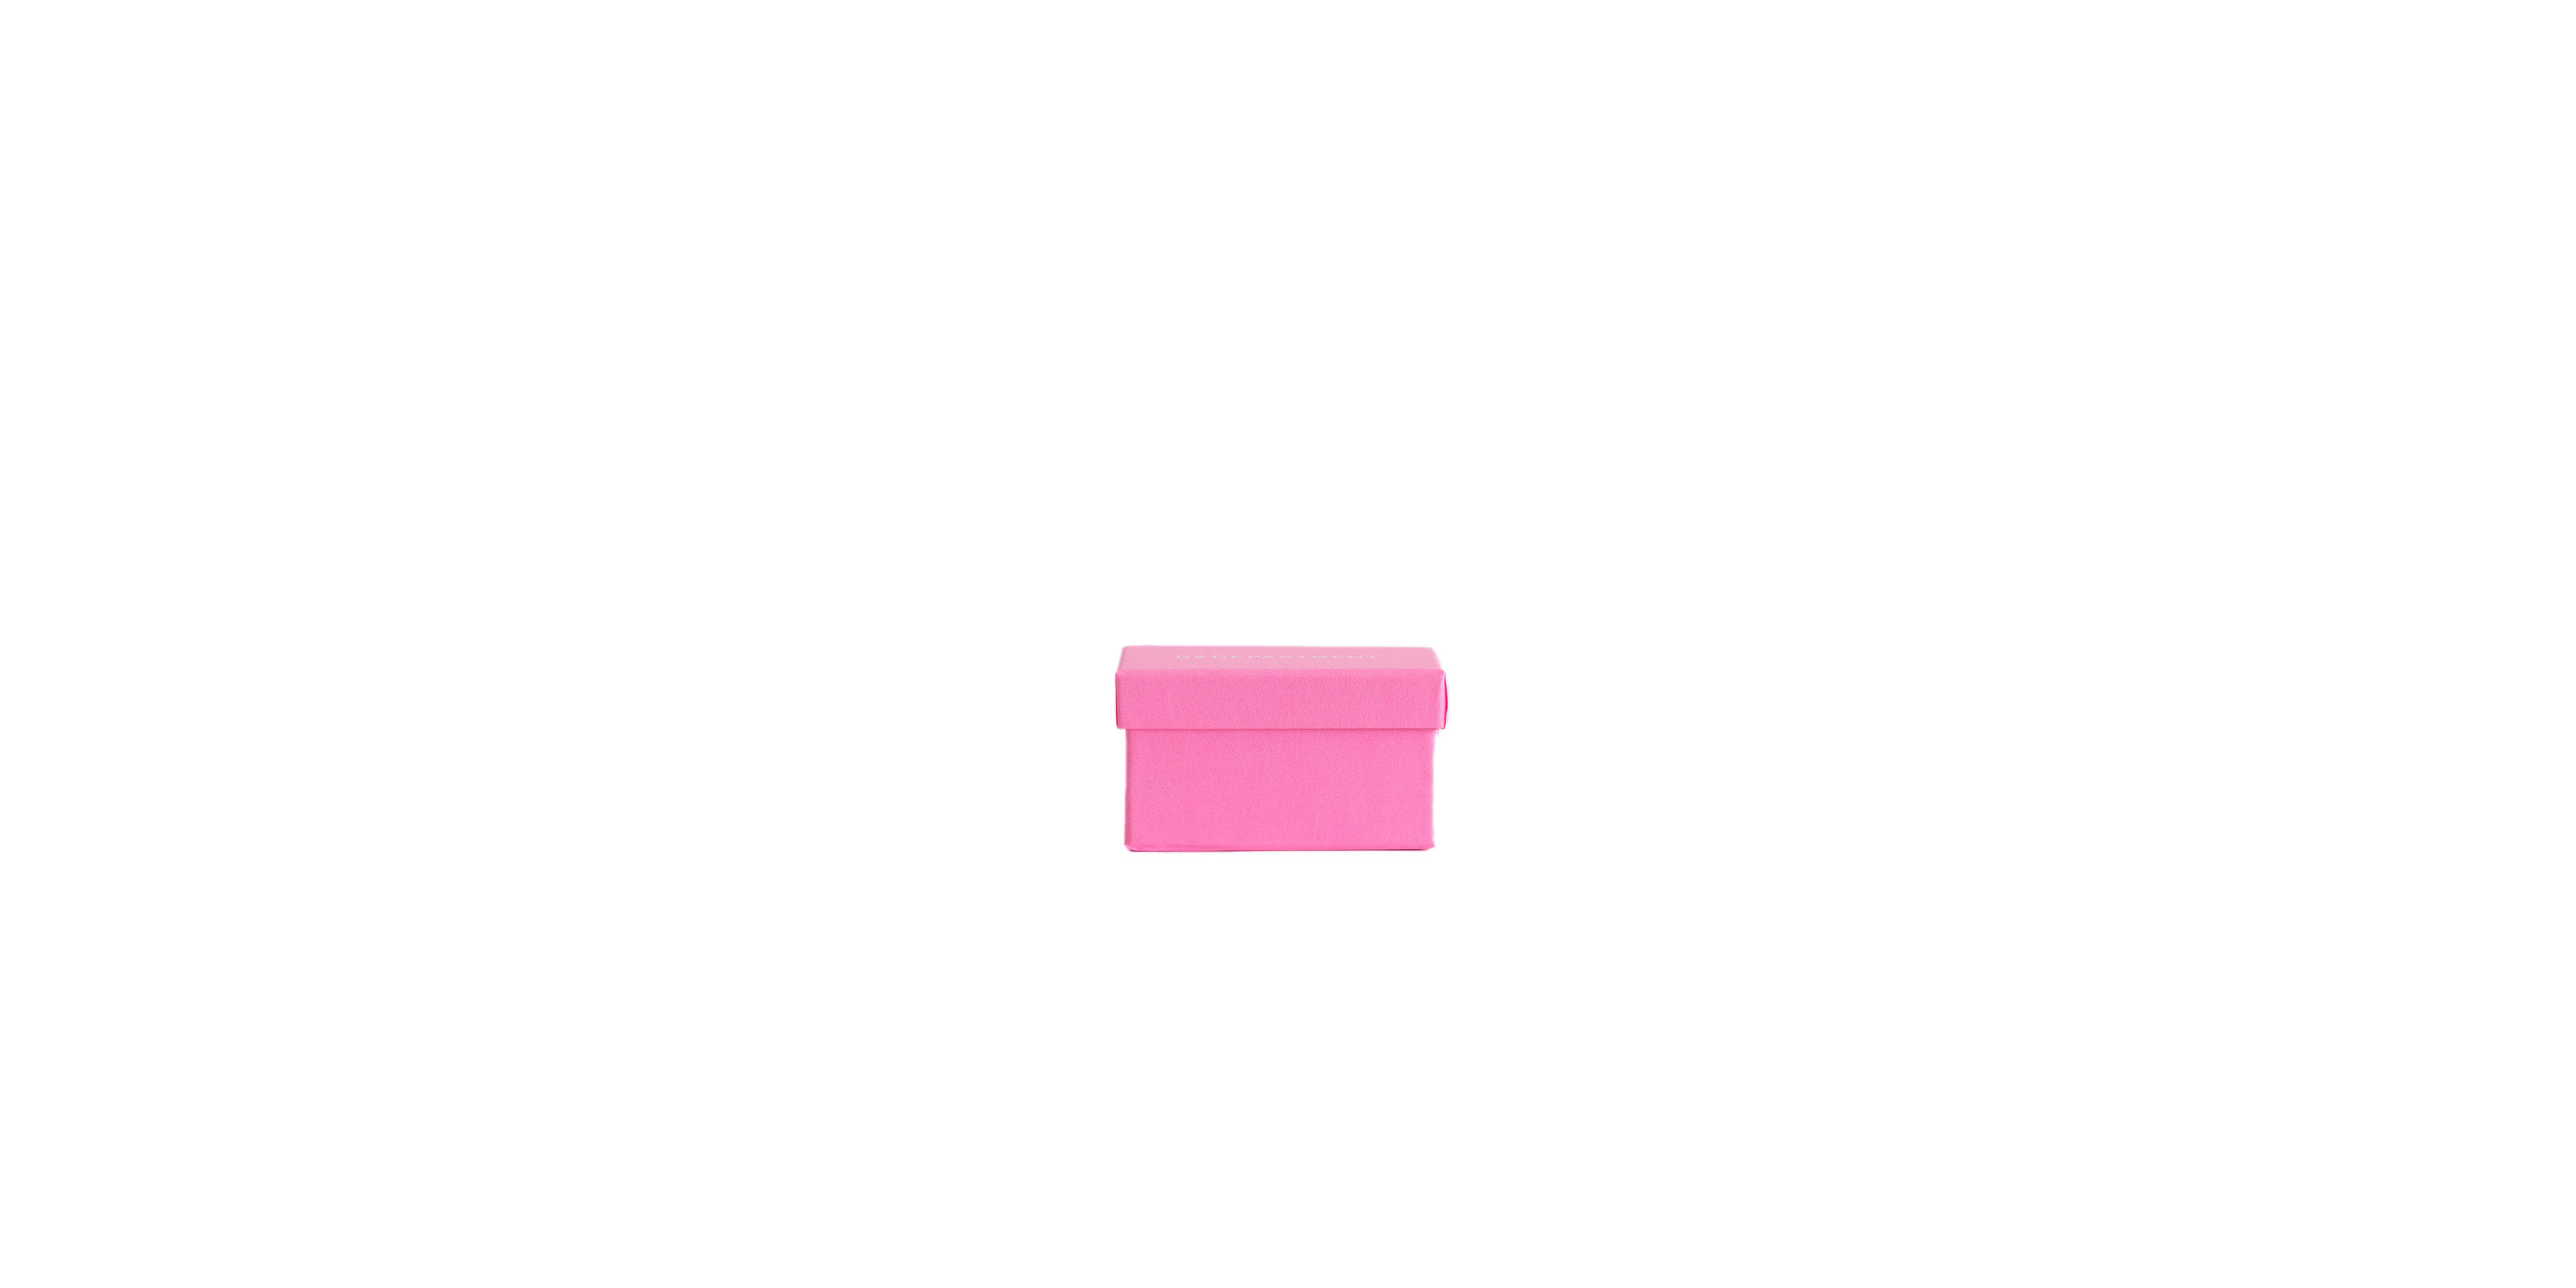 靴箱・名刺用・限定色ピンク